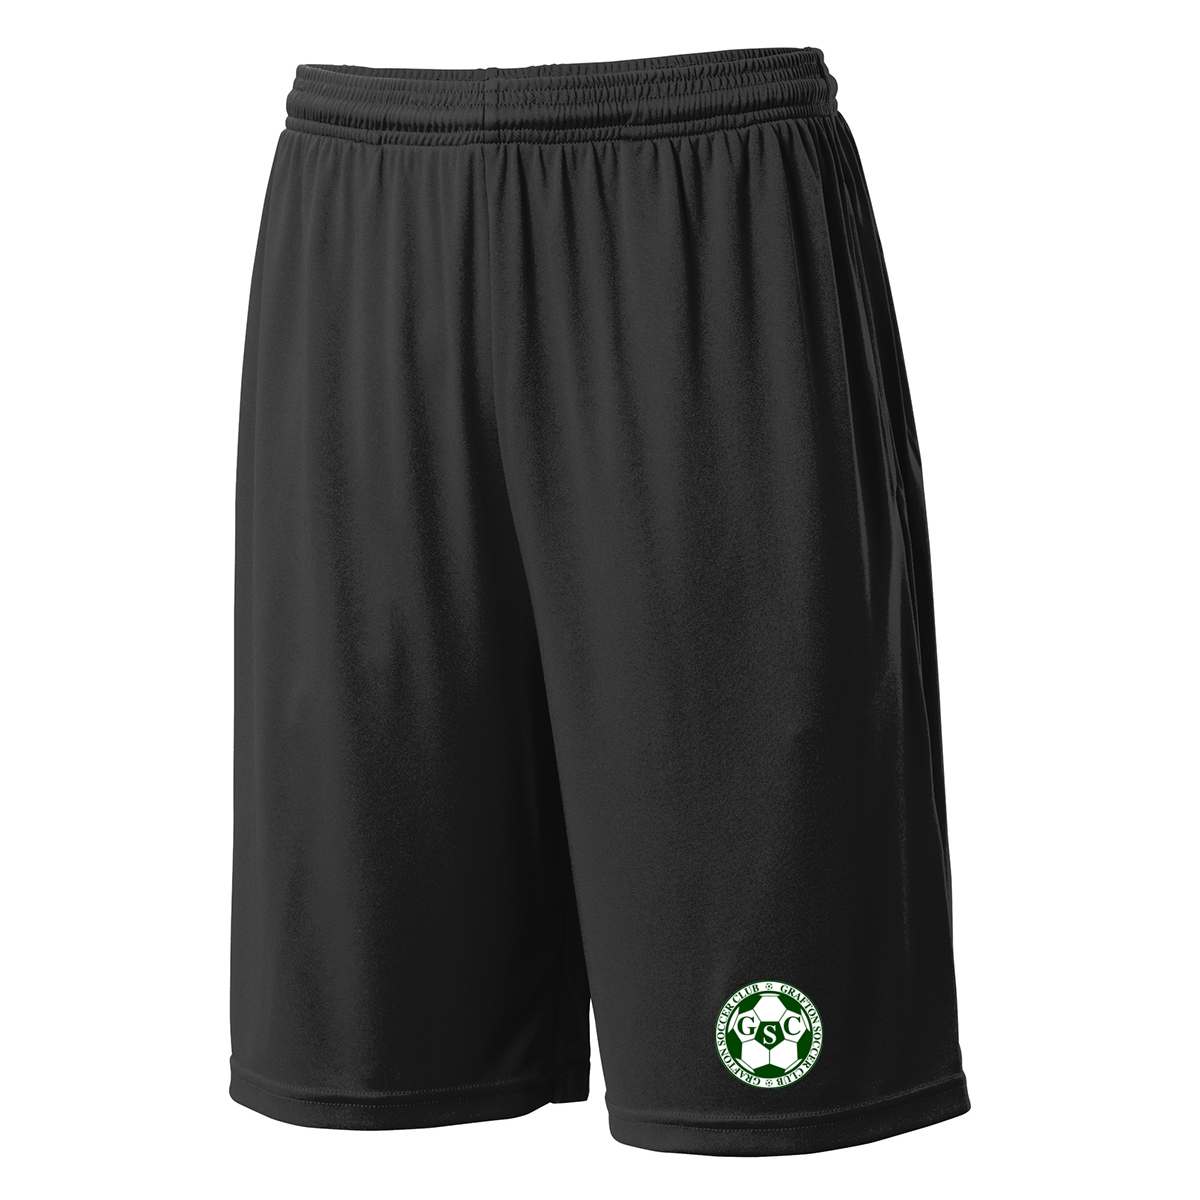 Grafton Youth Soccer Club Shorts